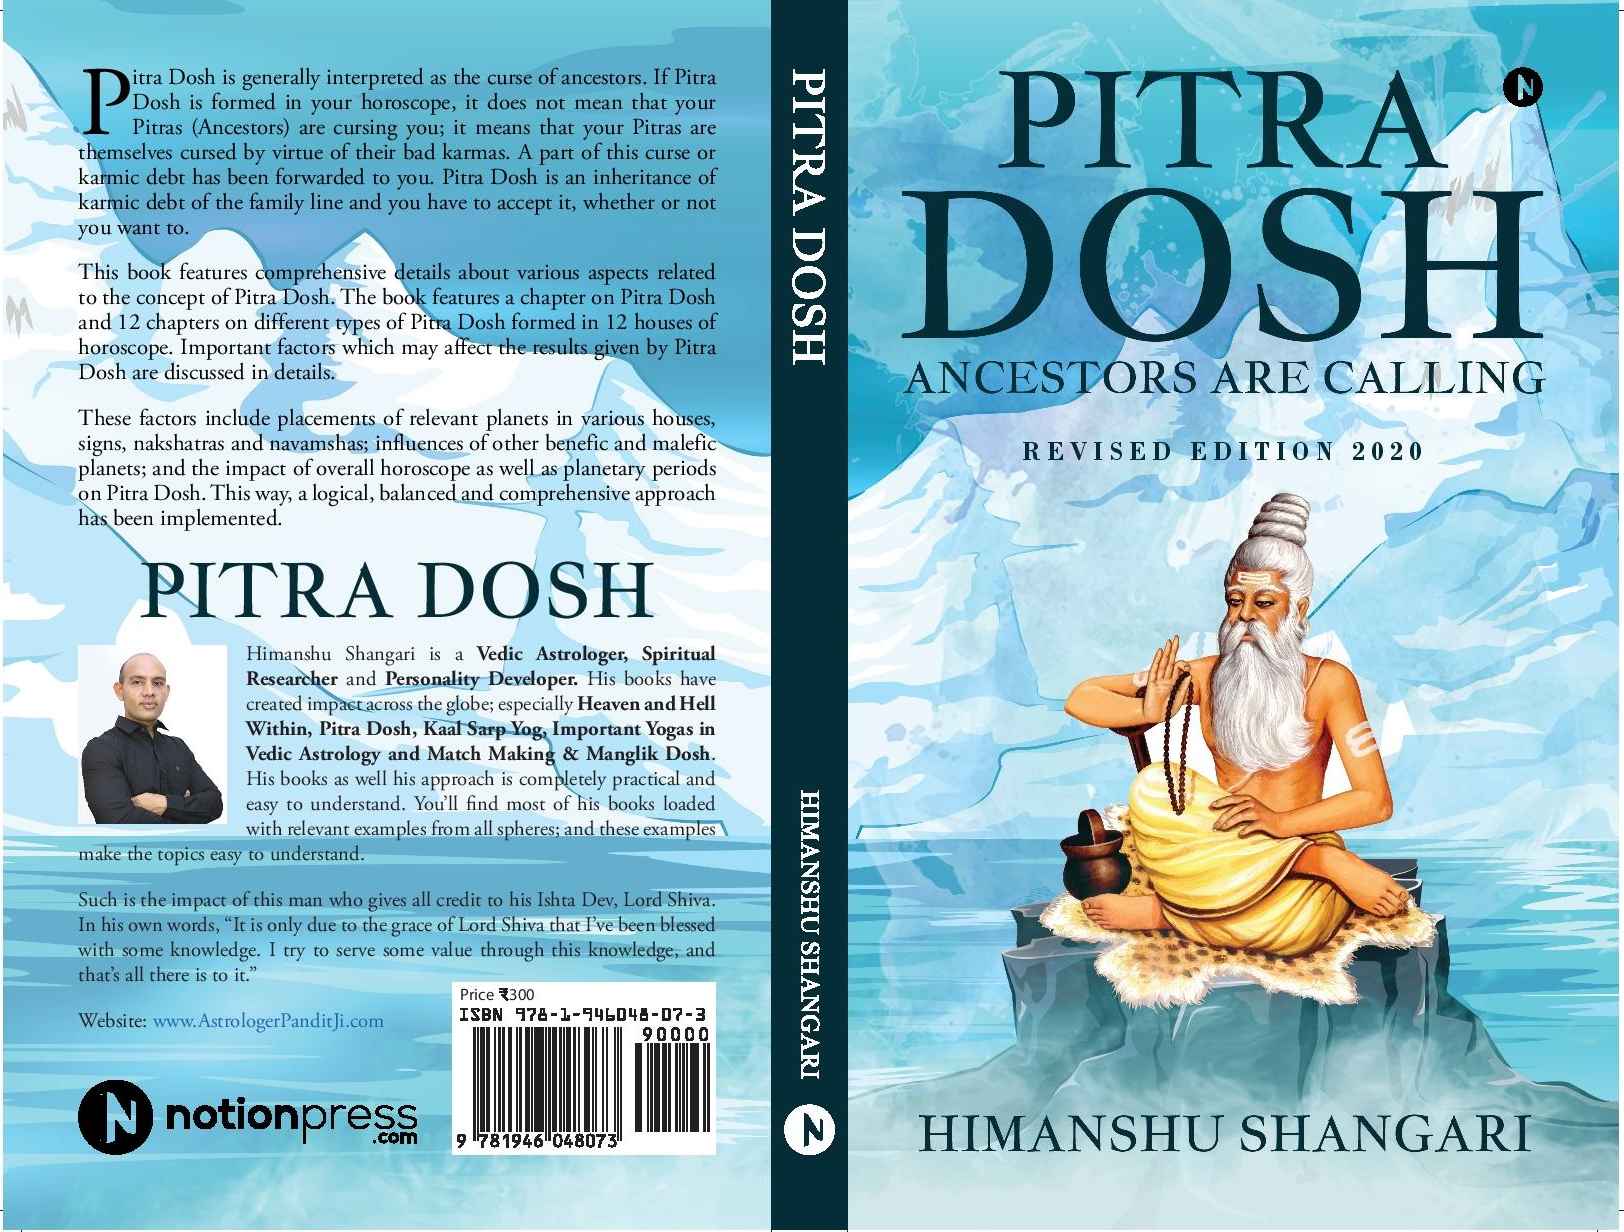 Pitra Dosh - Ancestors are Calling Revised Edition 2020